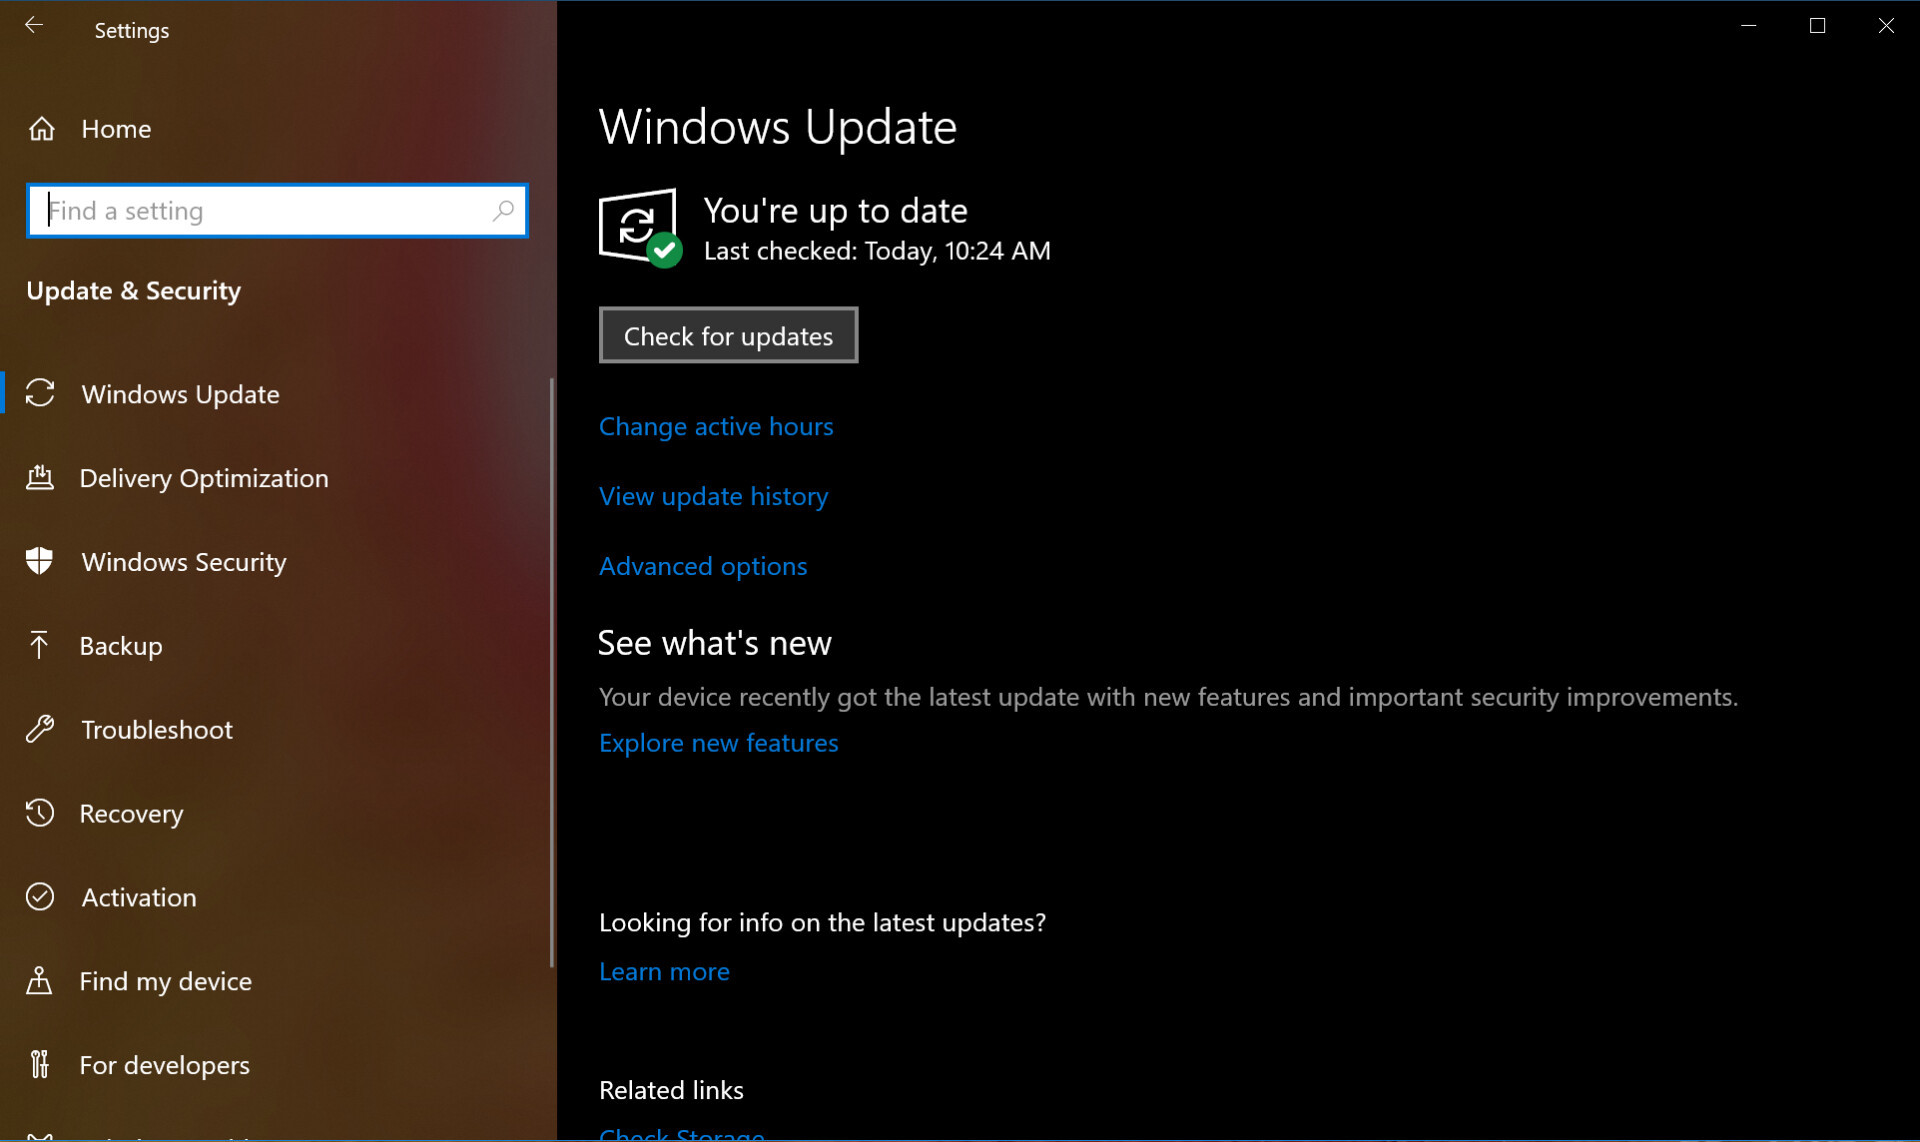 Svreenshot of Windows 10 update menu